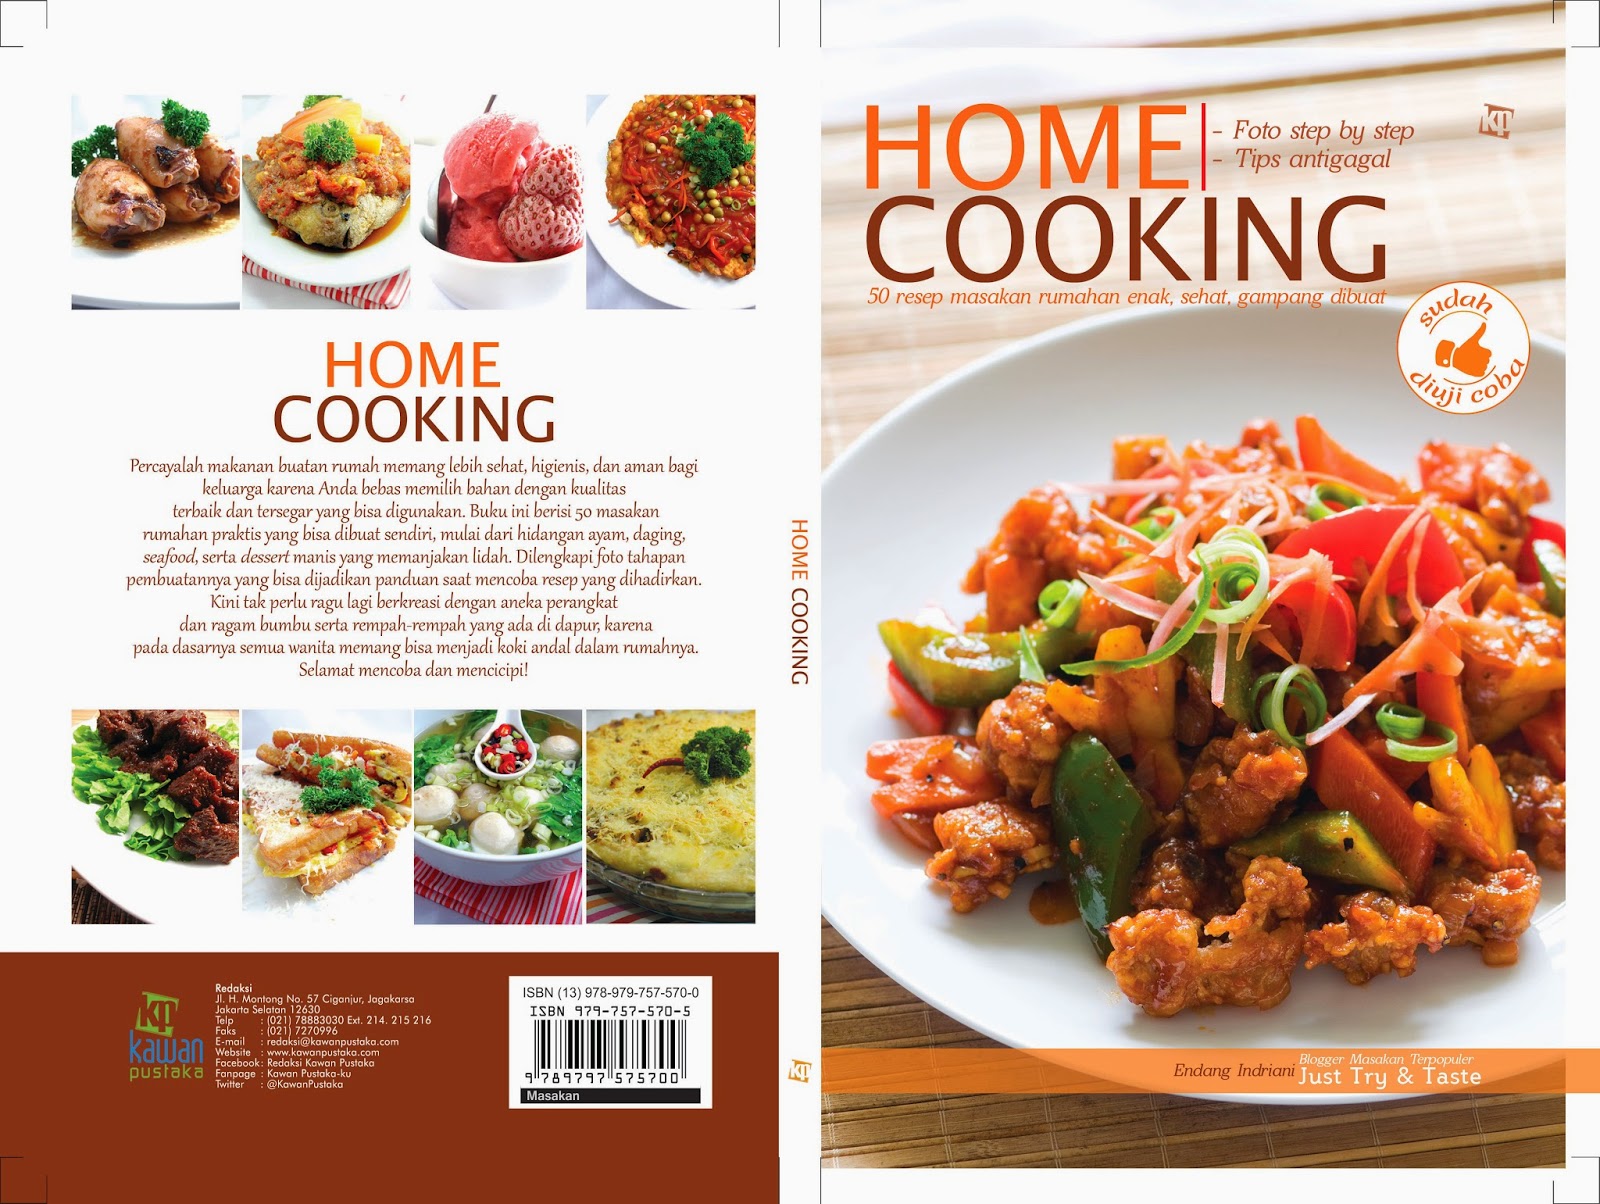  JTT Cookbooks JTT COOKBOOKS My 2nd Blog